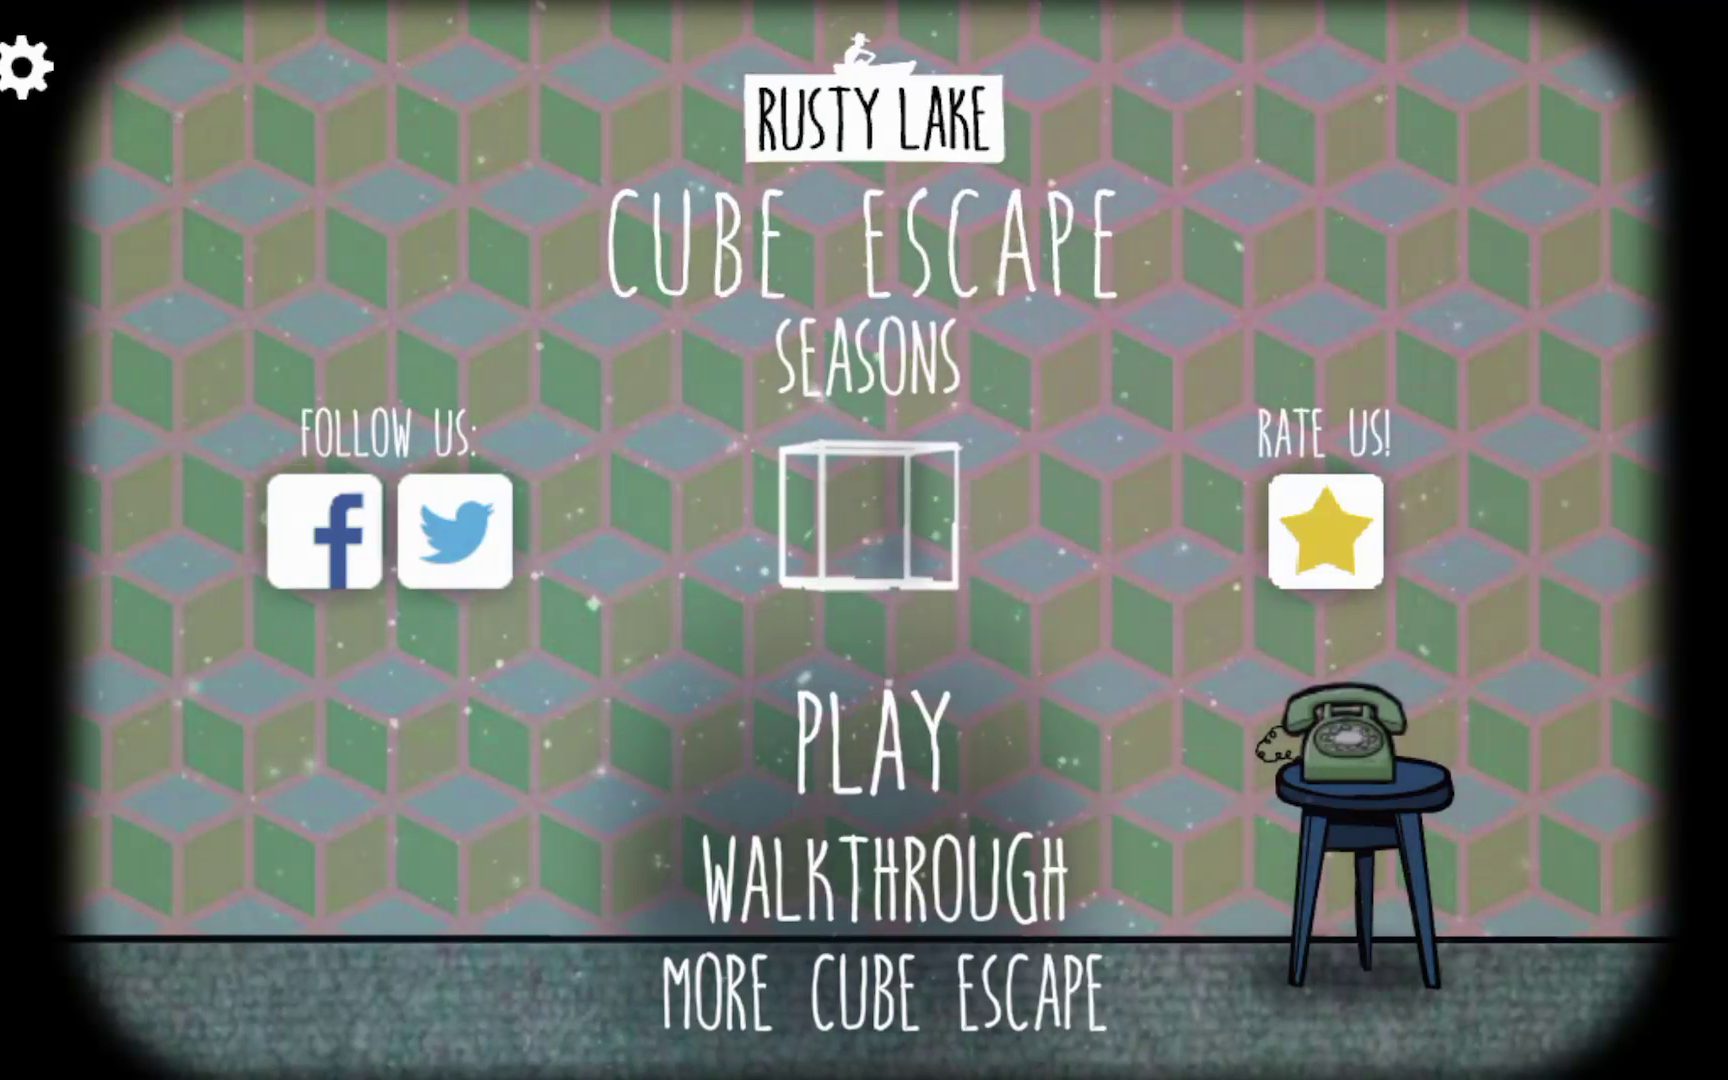 Code cube. Cube Escape Paradox часы 1. Cube Escape Seasons часы. Cube Escape Seasons Харви. Расти Лейк куб Эскейп Сизонс.